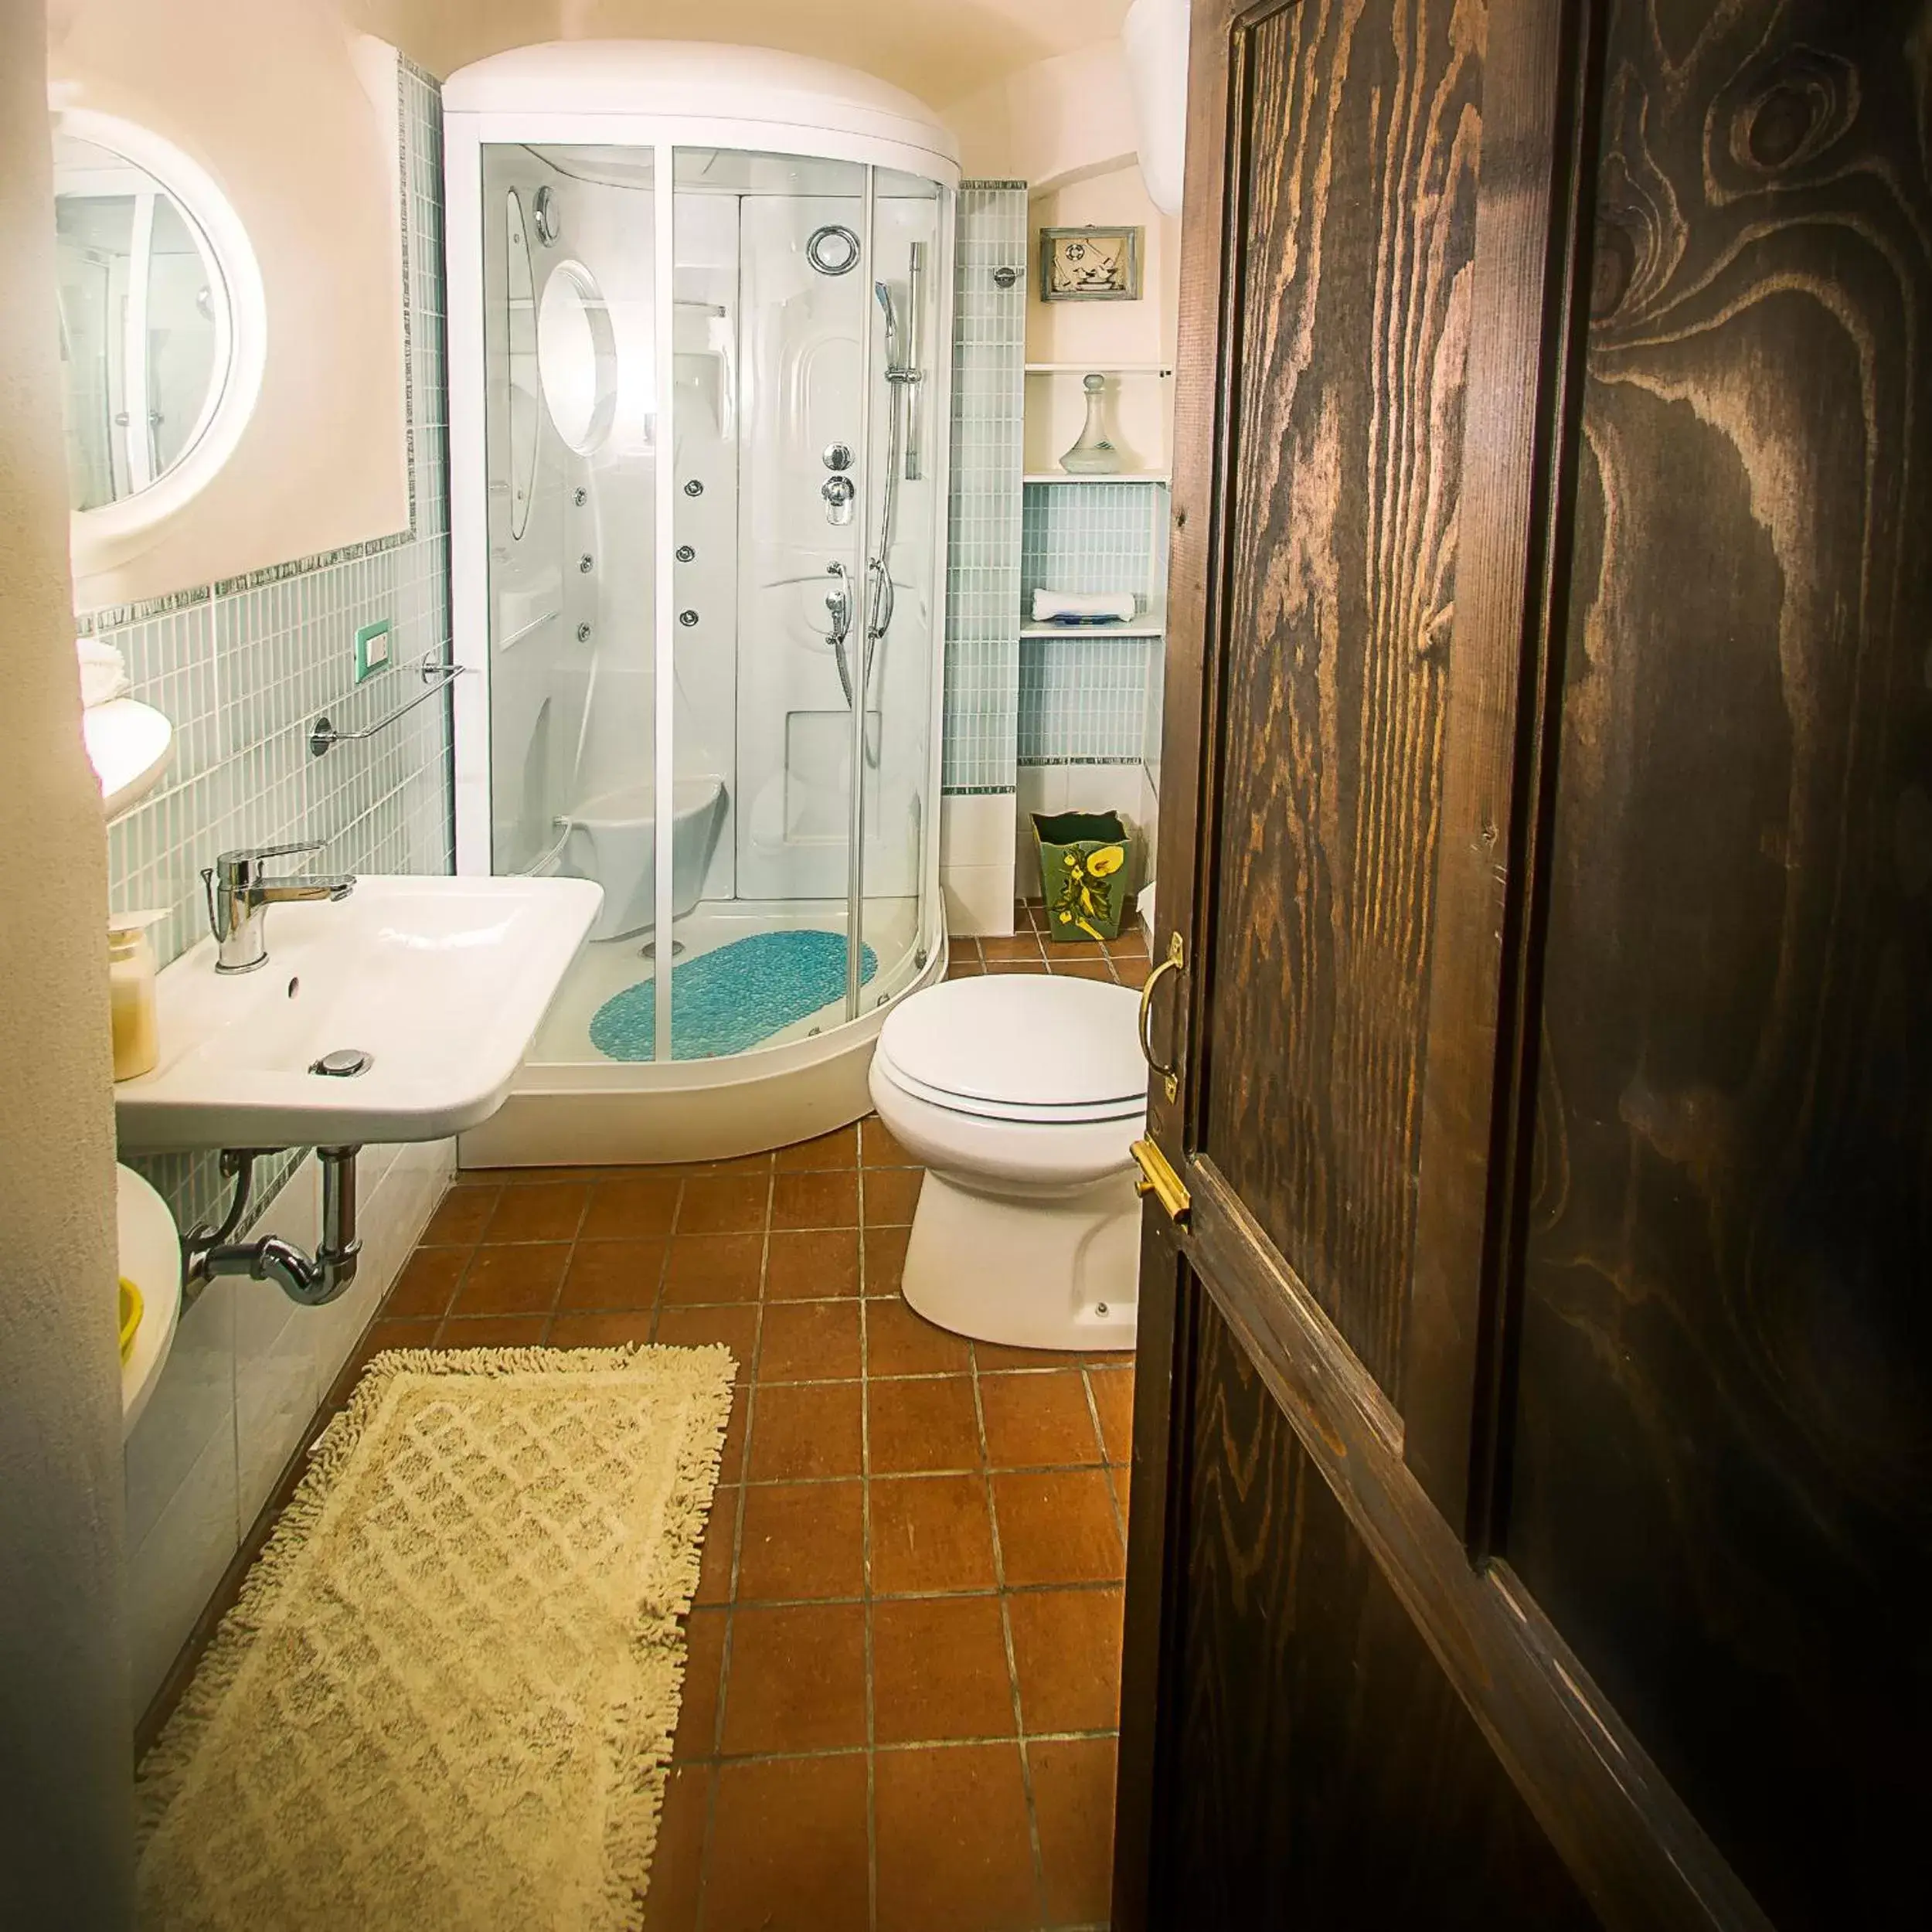 Other, Bathroom in Meliaresort Dimore Storiche